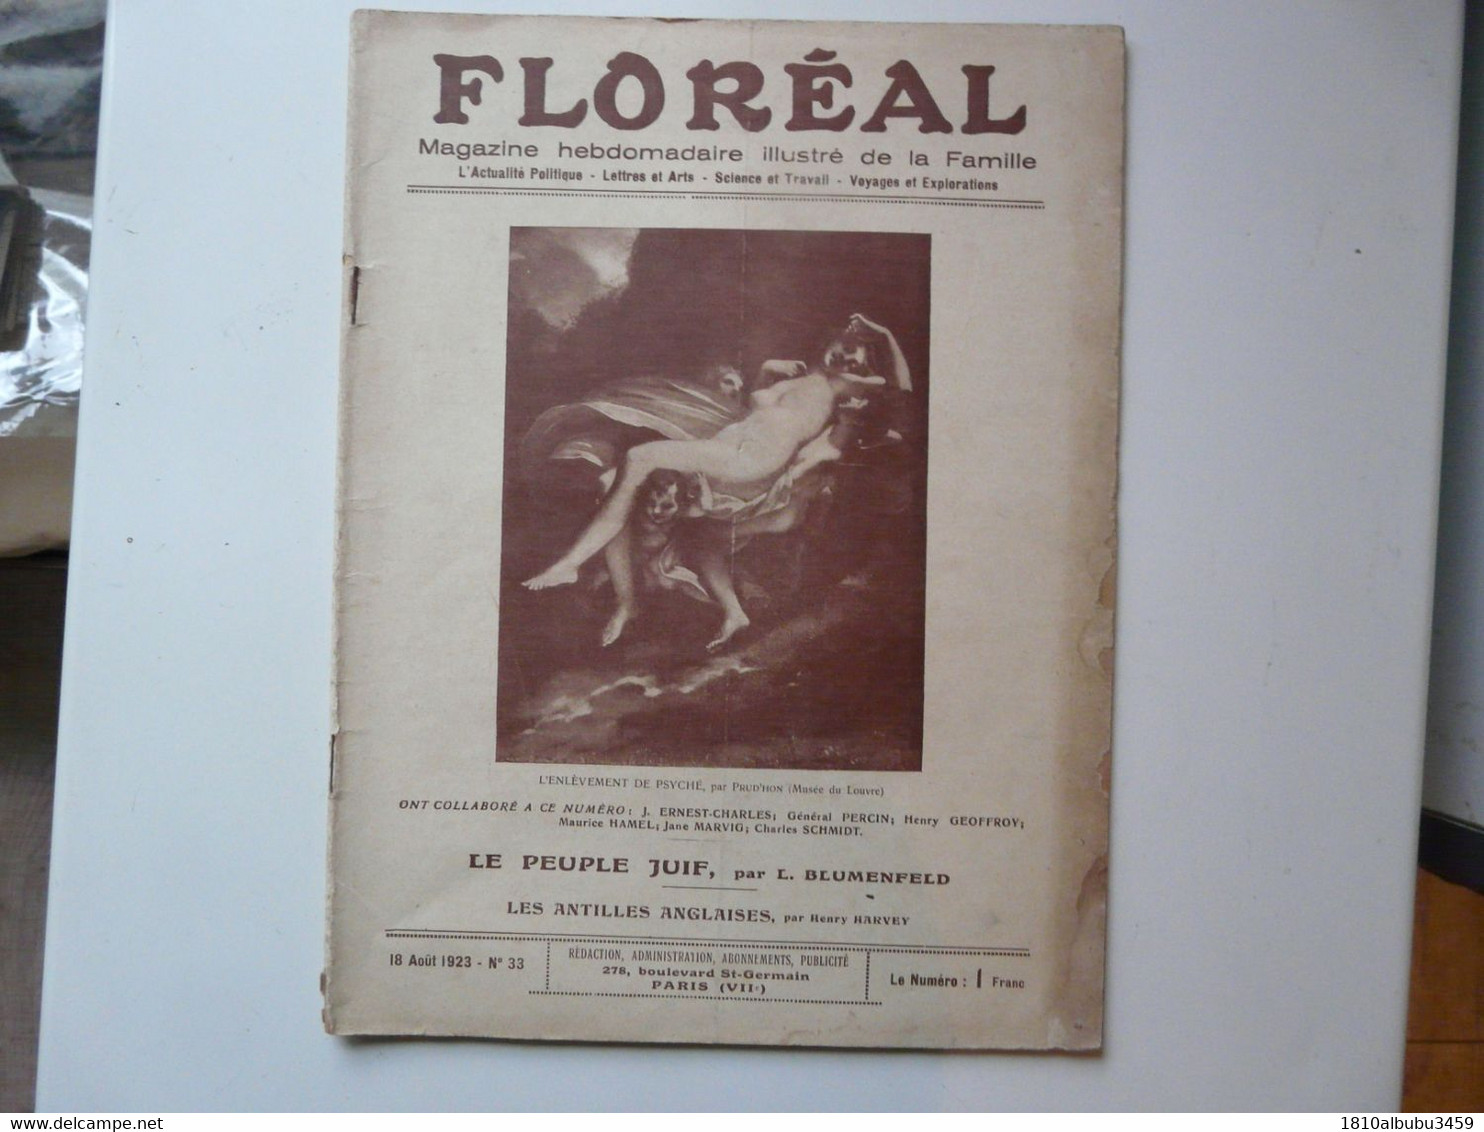 FLOREAL - MAGAZINE HEBDOMADAIRE ILLUSTRE DE LA FAMILLE 1923 - Sociologie